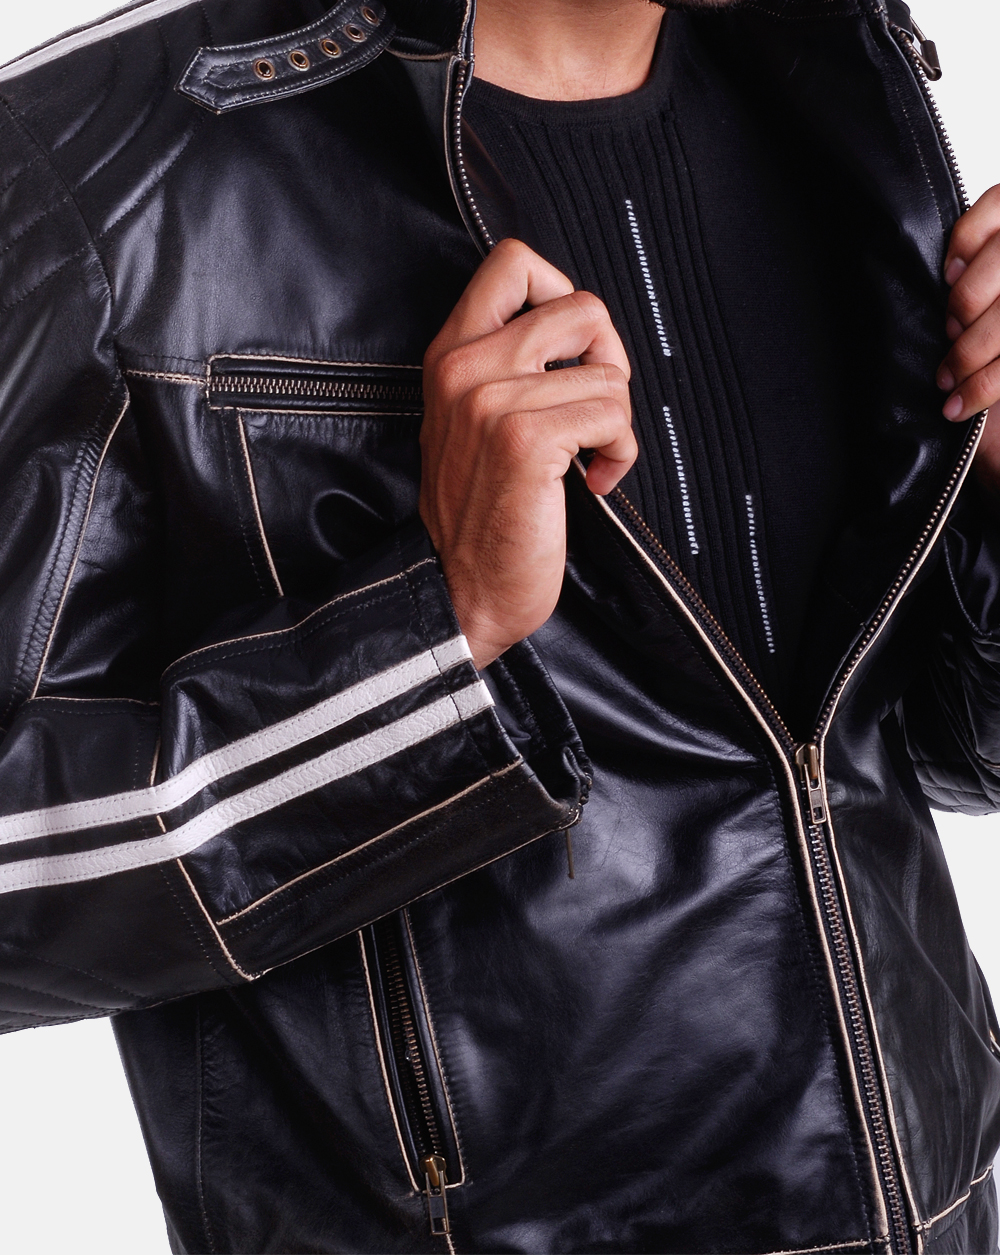 Minnetosa strip leather biker jacket